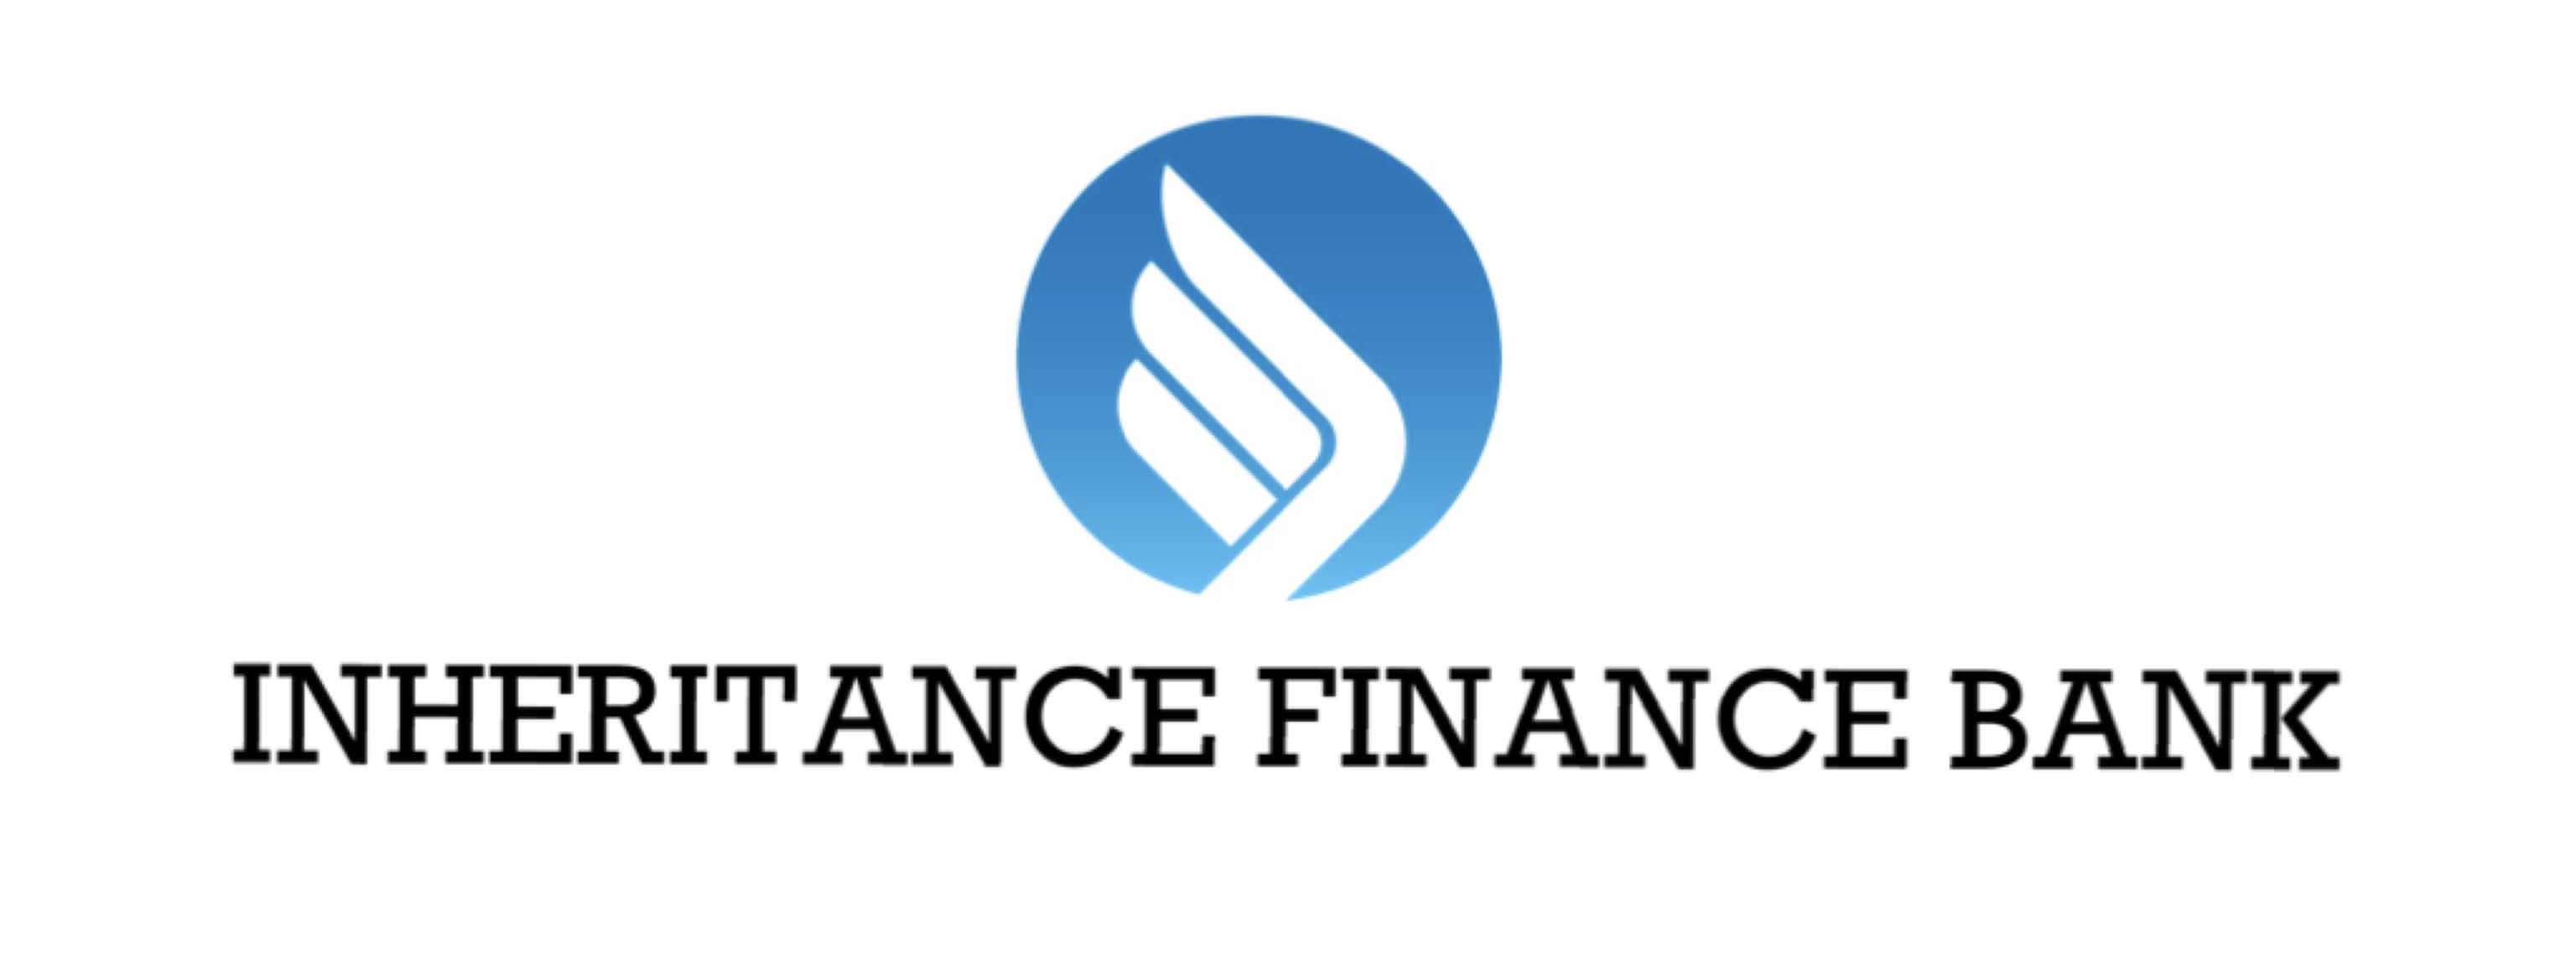 Inheritance Finance Bank  